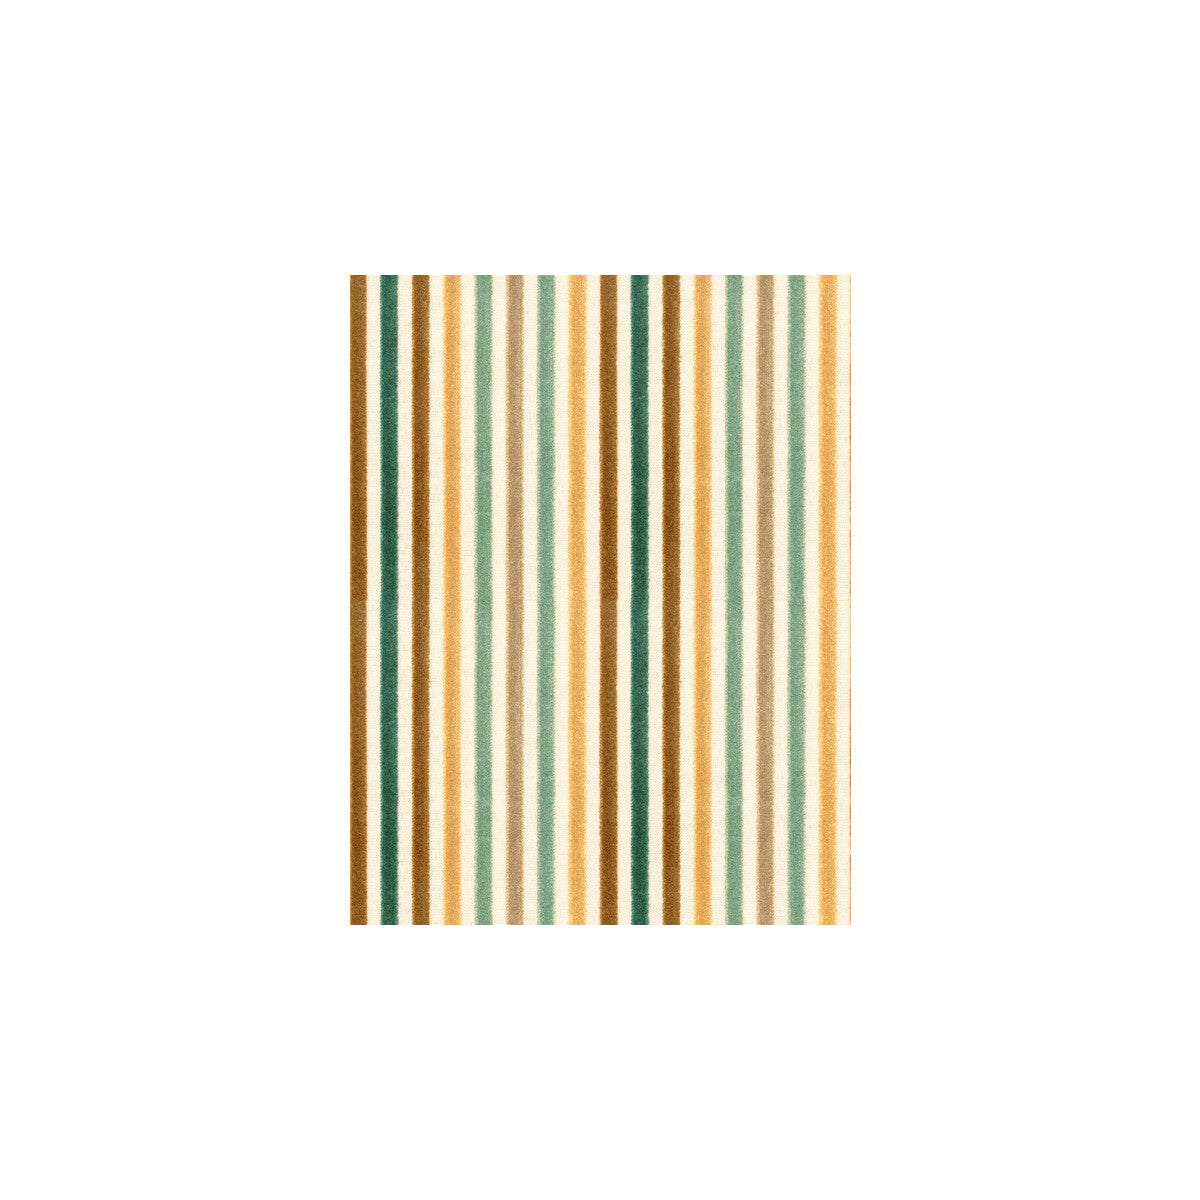 Kf Bas fabric - pattern 31517.1635.0 - by Kravet Basics